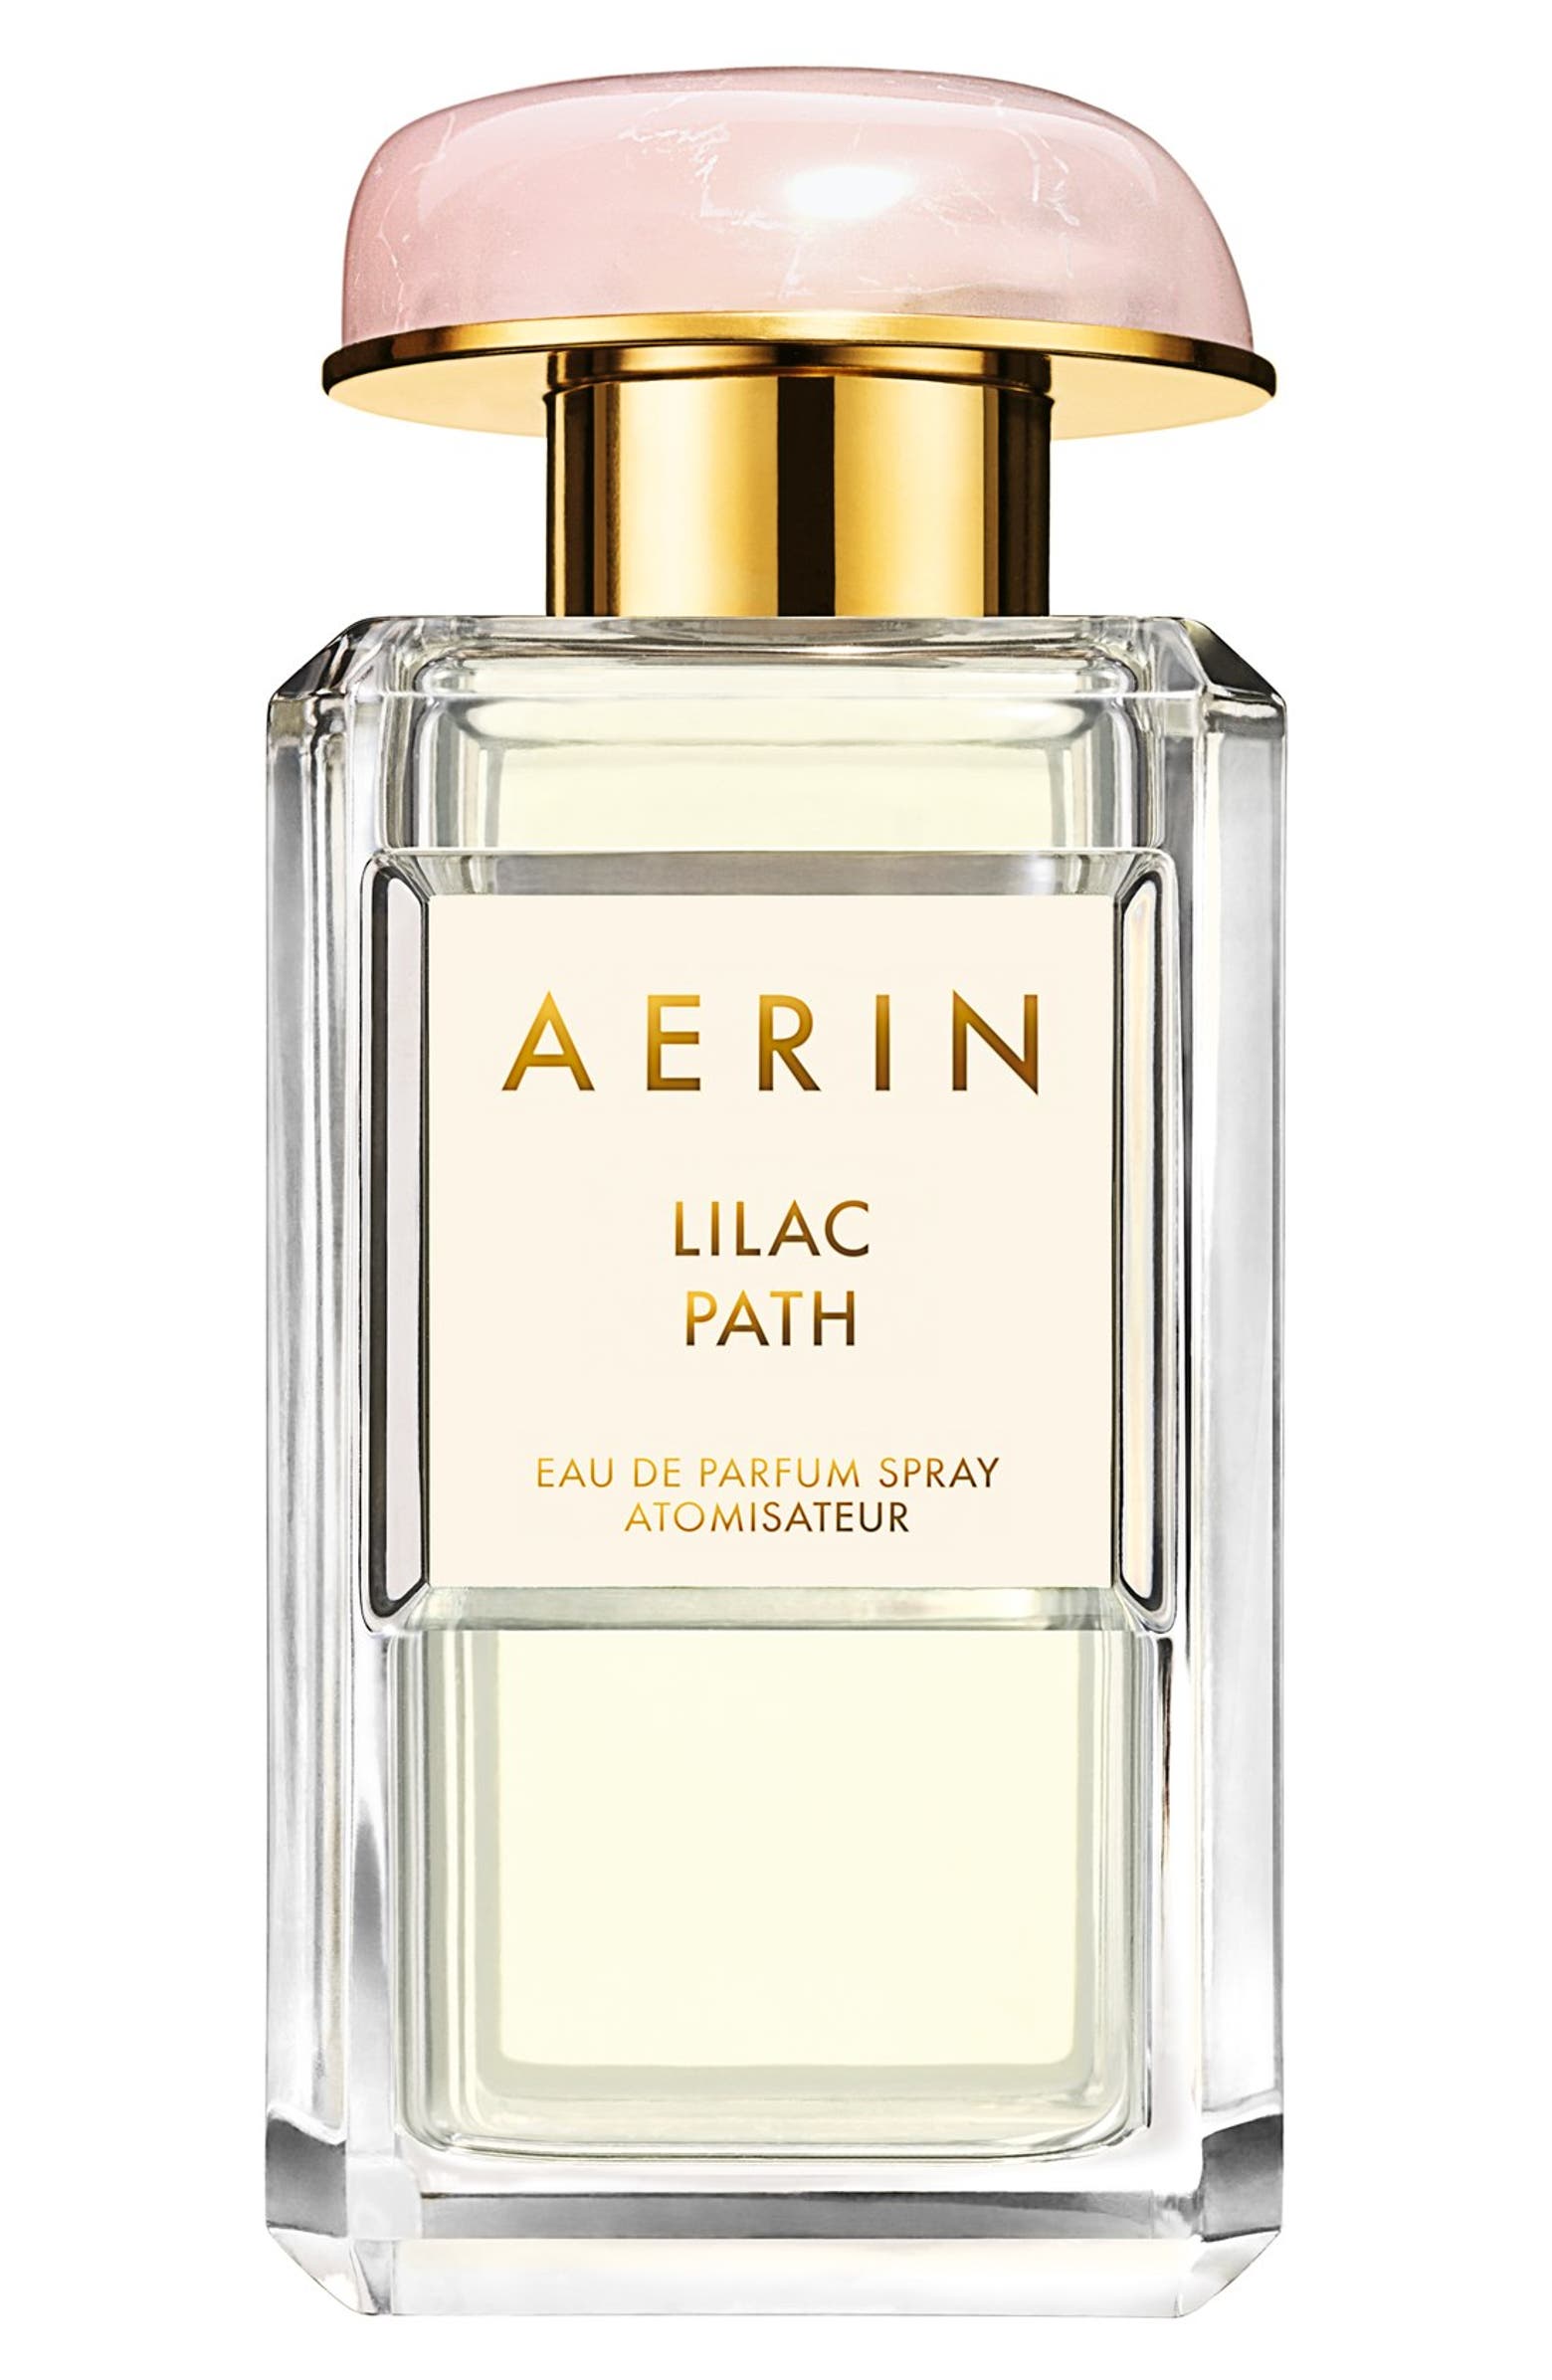 AERIN Beauty Lilac Path Eau de Parfum Spray